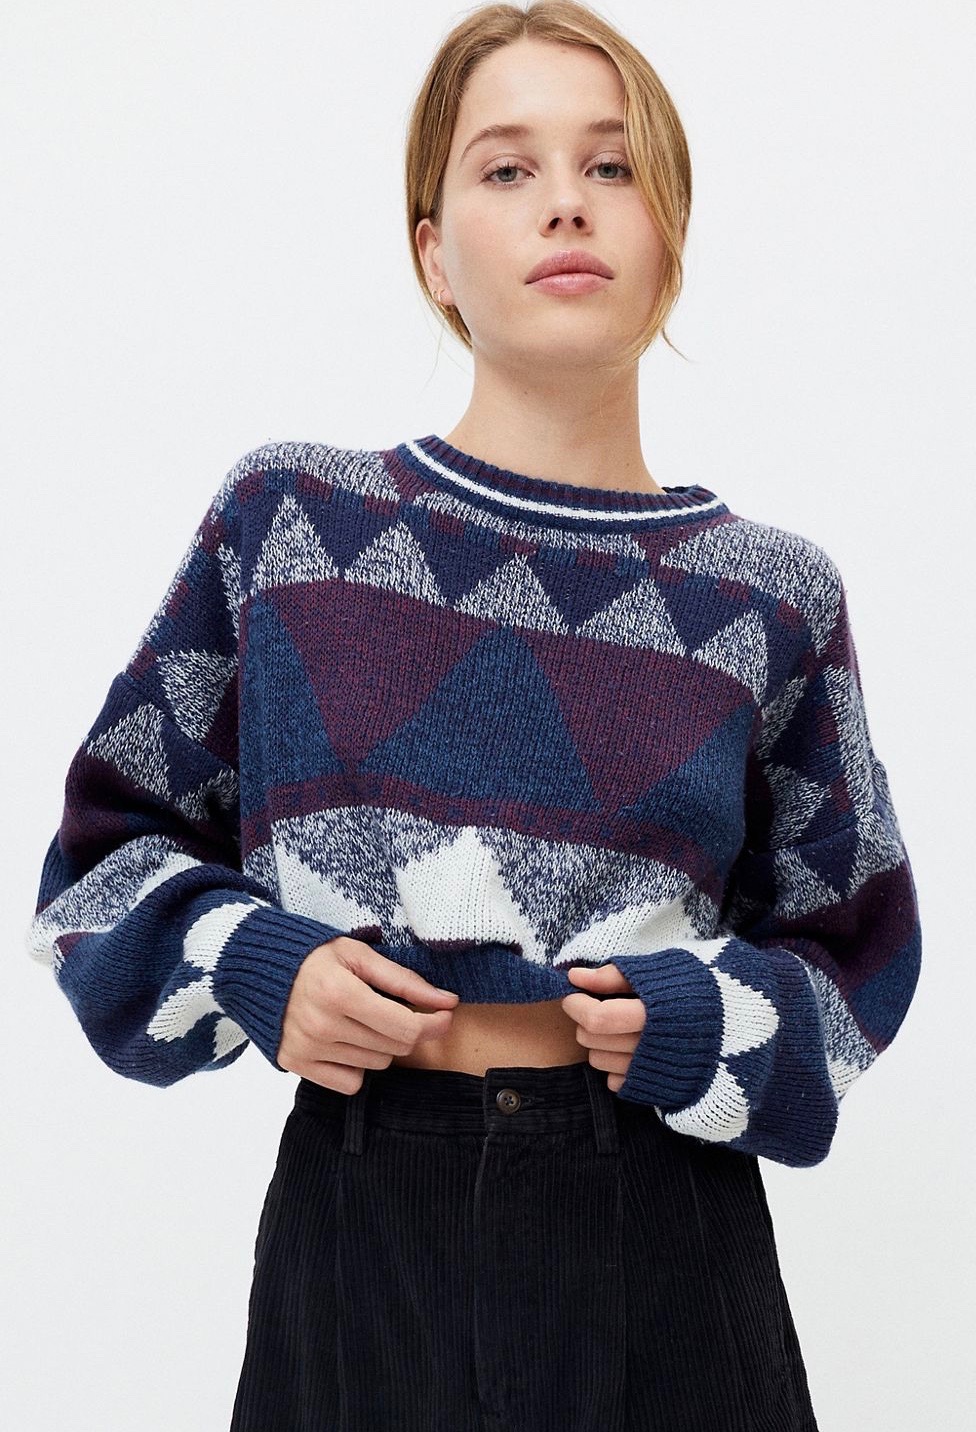 Statement Sweaters #12